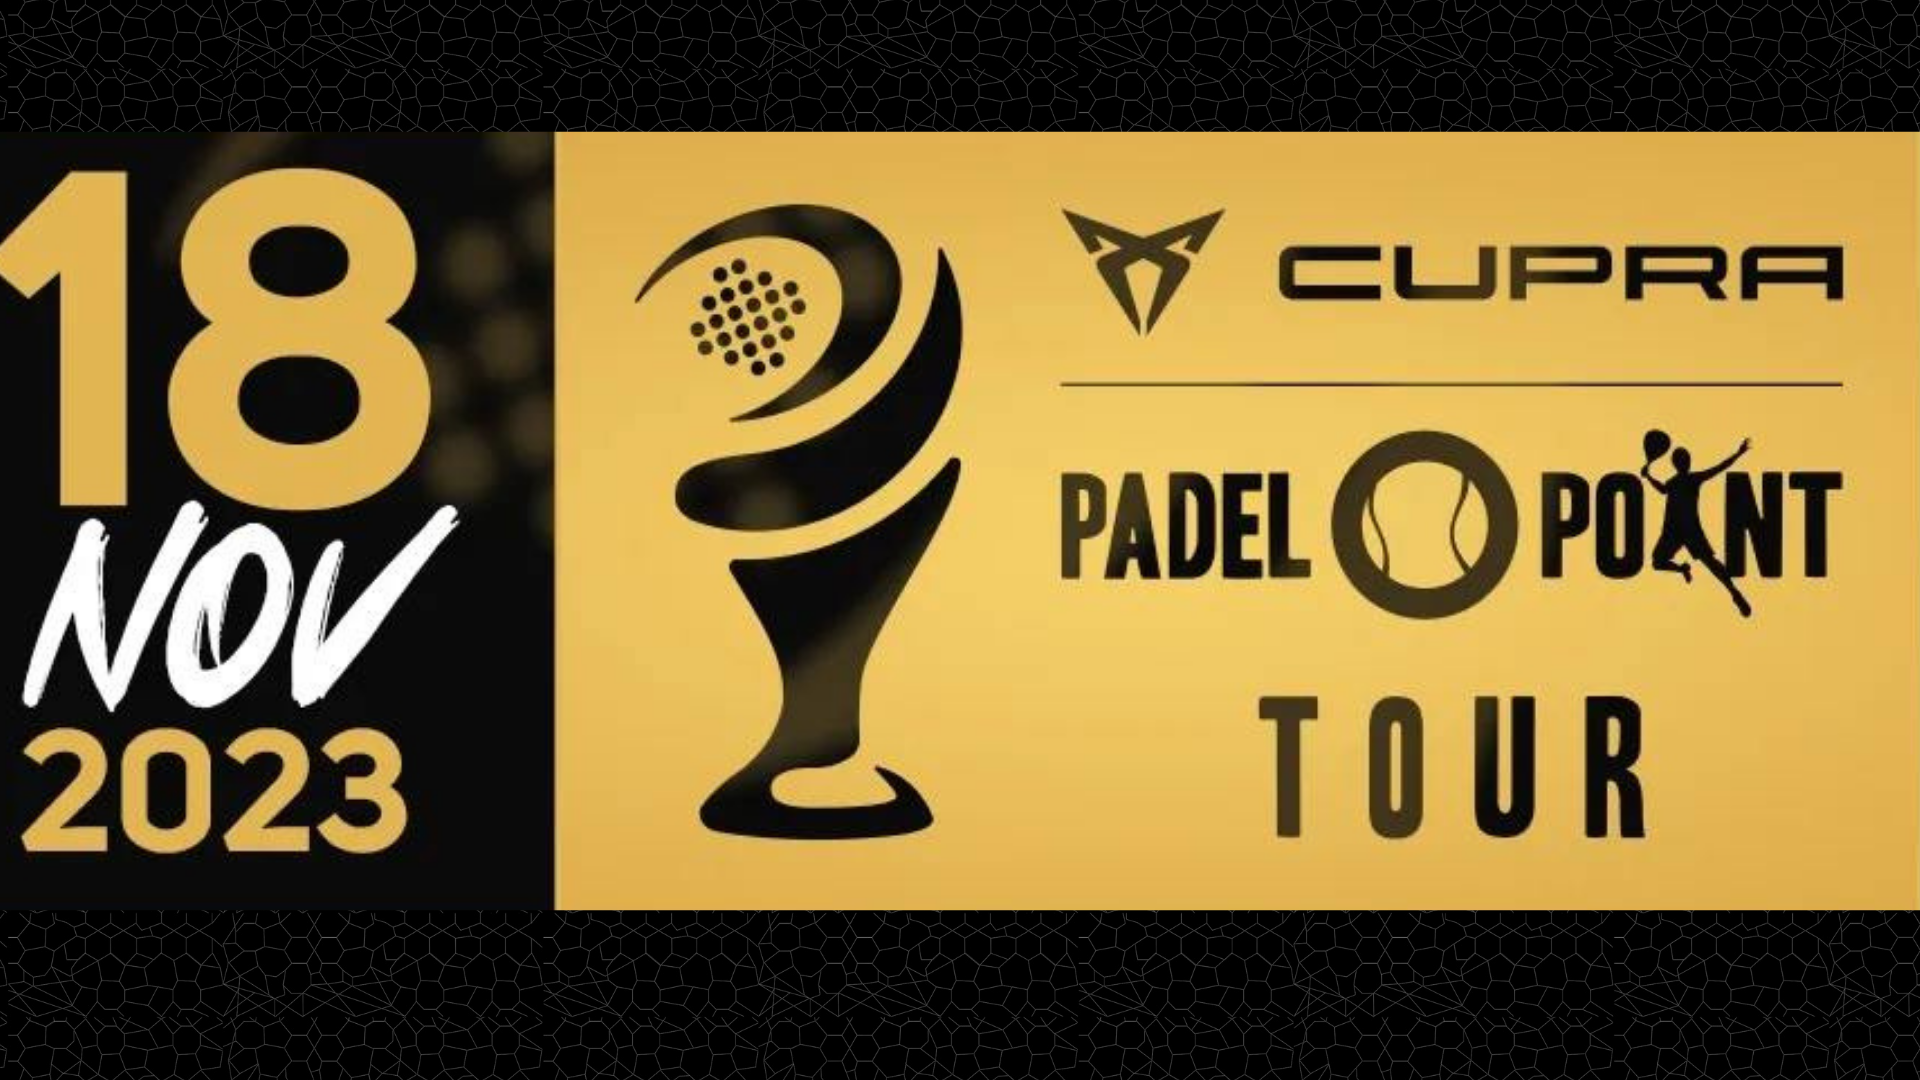 Cupra Master-finale Padel Point tour 2023 november 18